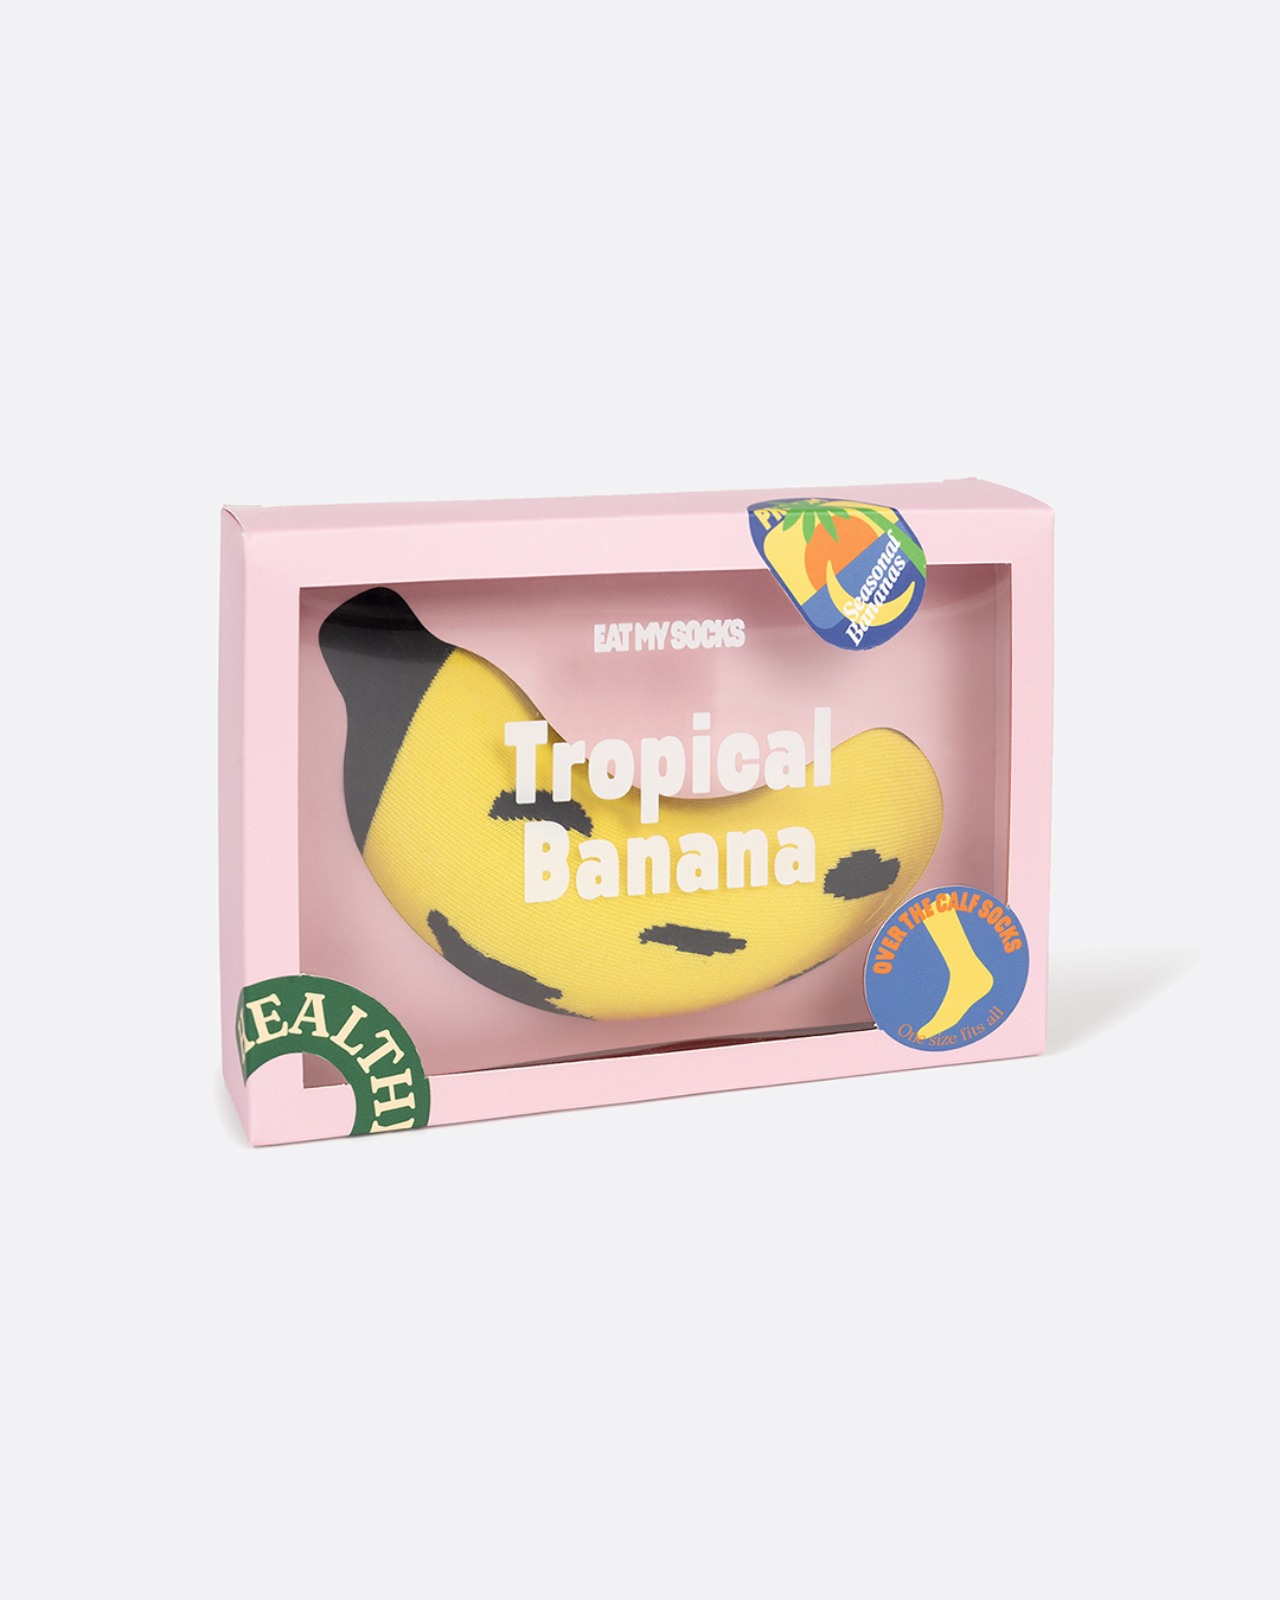 [EAT MY SOCKS] Tropical Banana